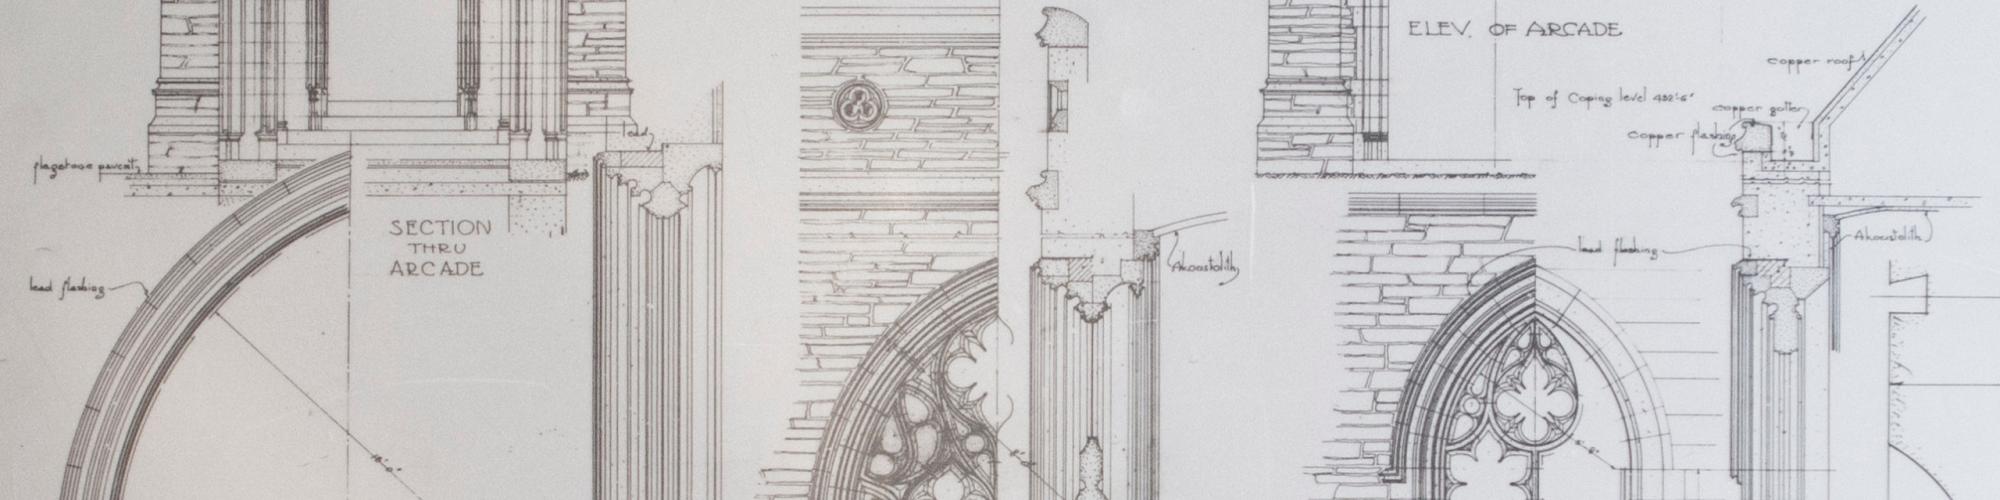 Blueprints for Gothic architecture at Duke University